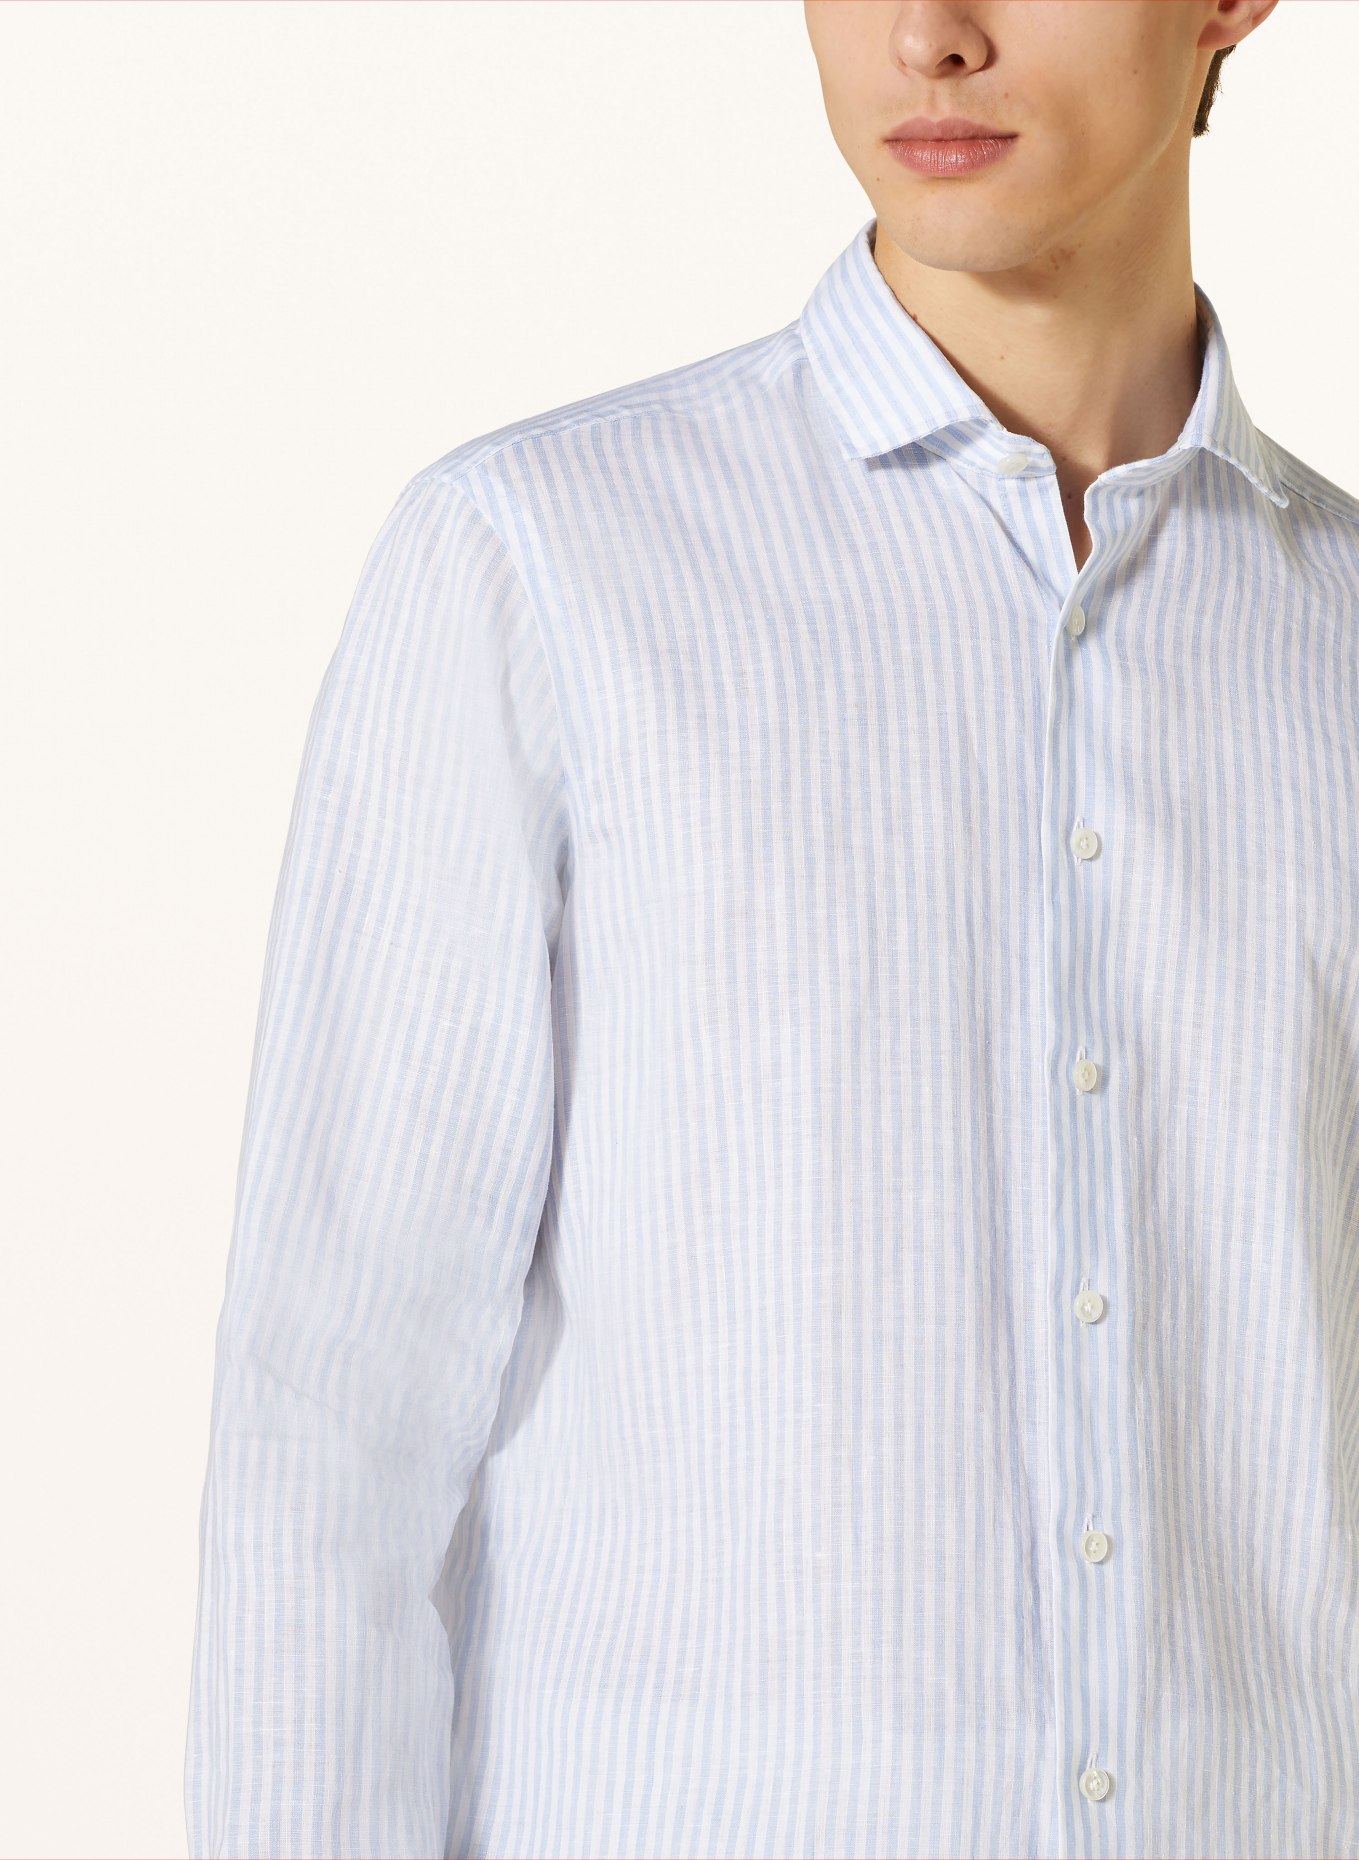 OLYMP SIGNATURE Hemd tailored Fit aus Leinen, Farbe: HELLBLAU/ WEISS (Bild 4)